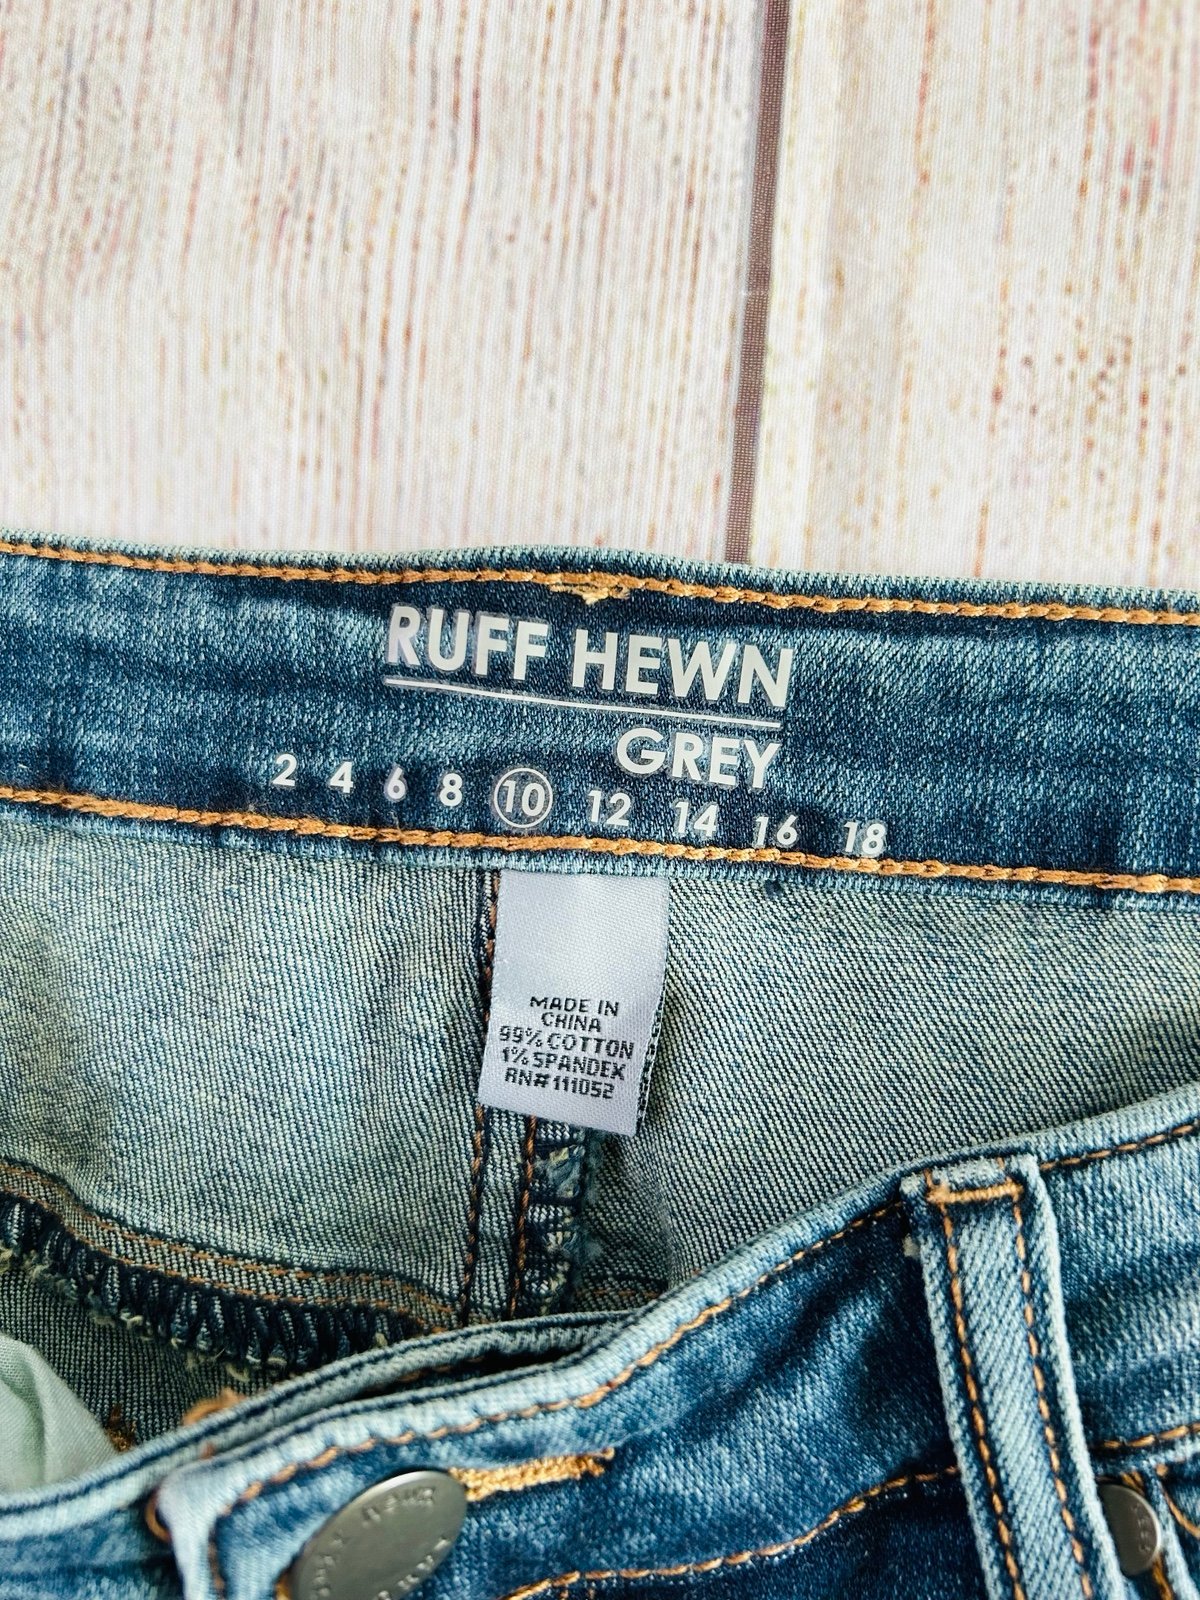 Comfortable Ruff Hewn Women’s Medium Wash Distressed Rhinestone Jeans Size 10 ppwYkvfKc Online Exclusive